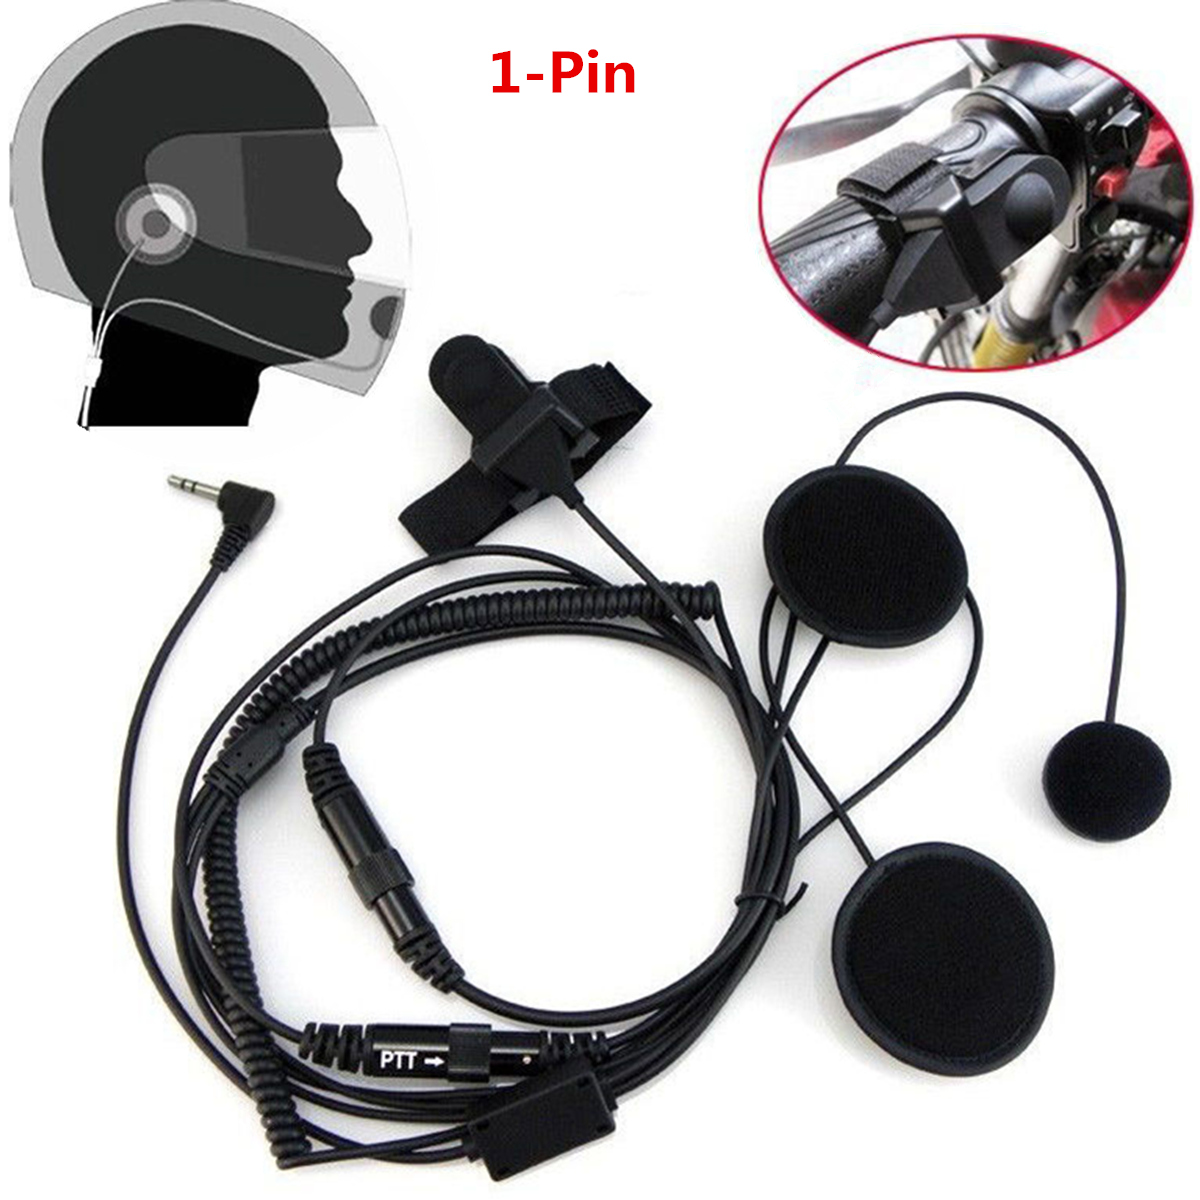 1-Pin-Full-Face-Close-Motorcycle-Helmet-Headset-For-Motorola-Walkie-Talkie-Radio-1158200